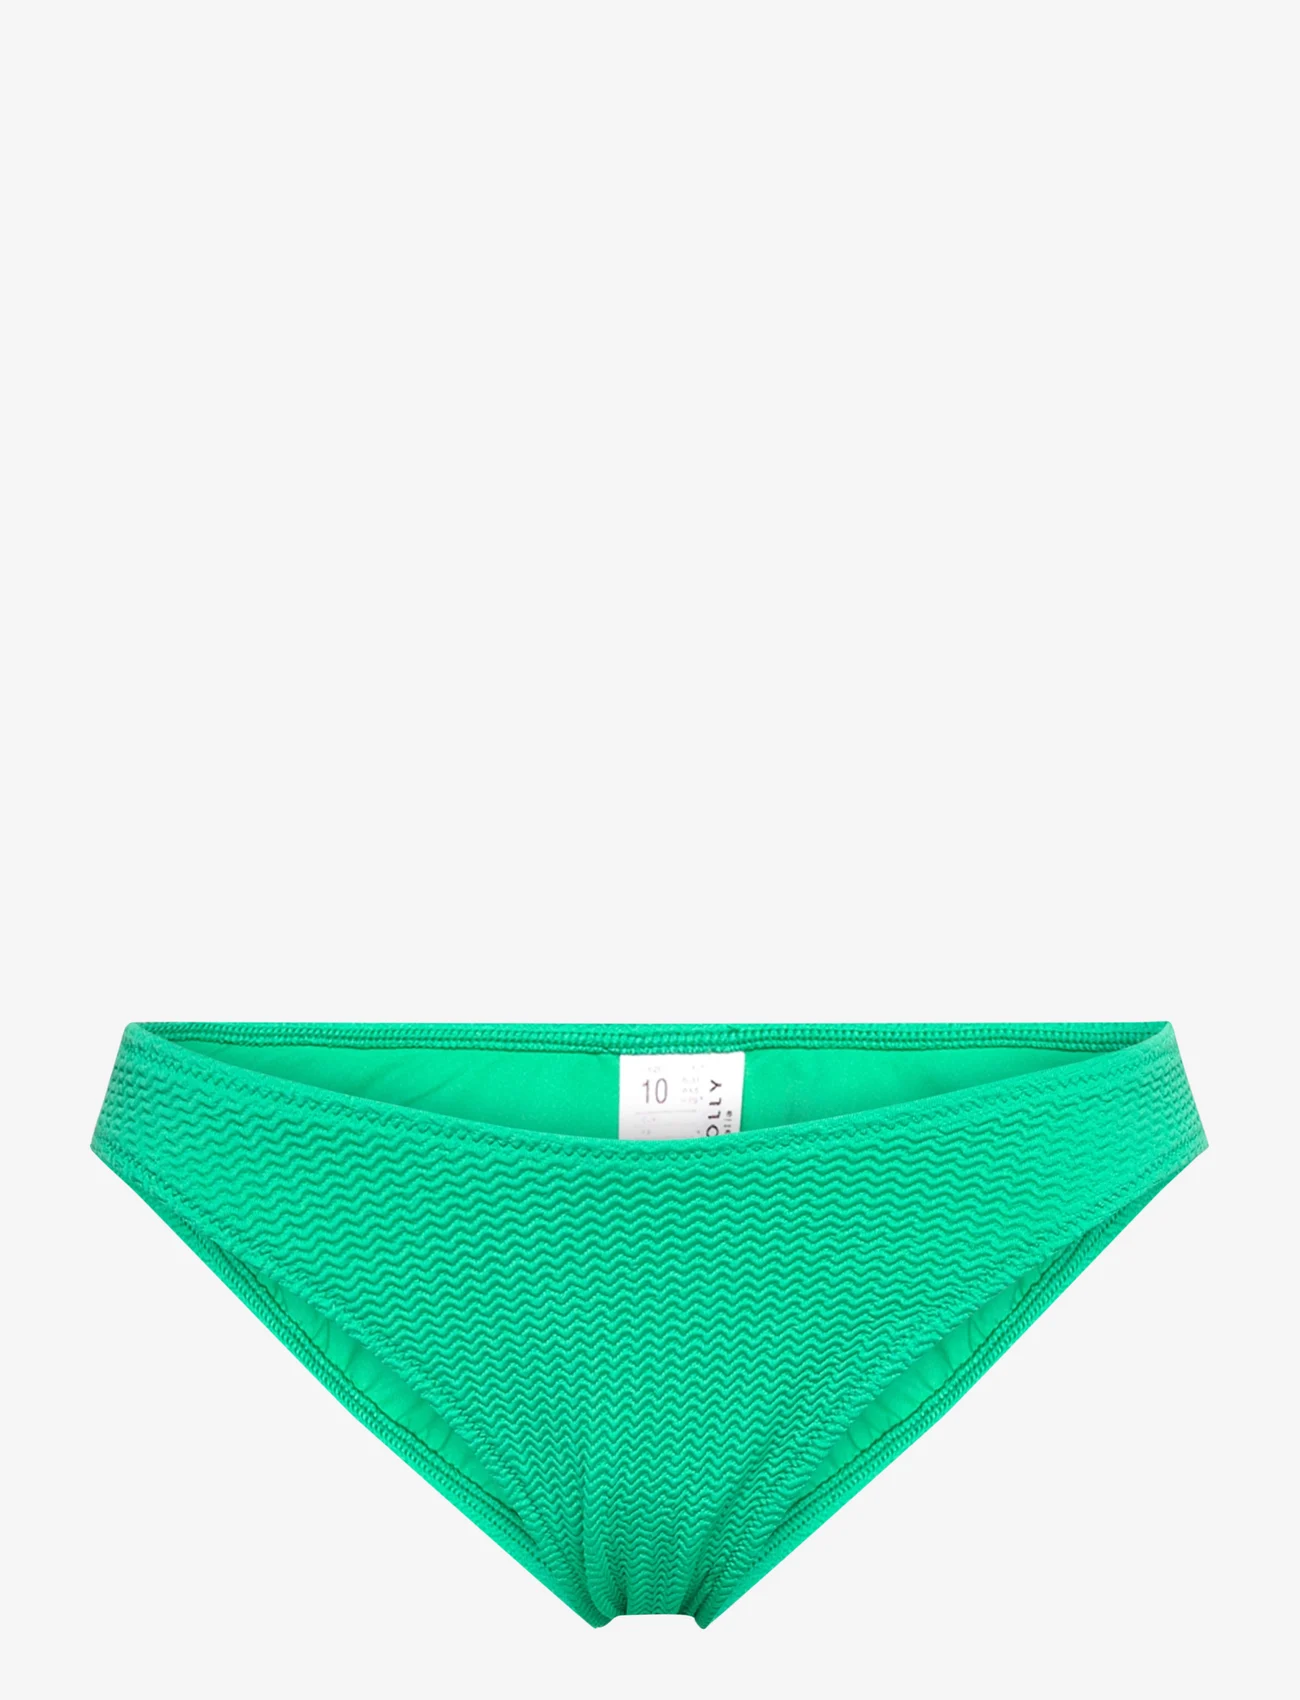 Seafolly - SeaDive High Cut Pant - bikini briefs - jade - 0